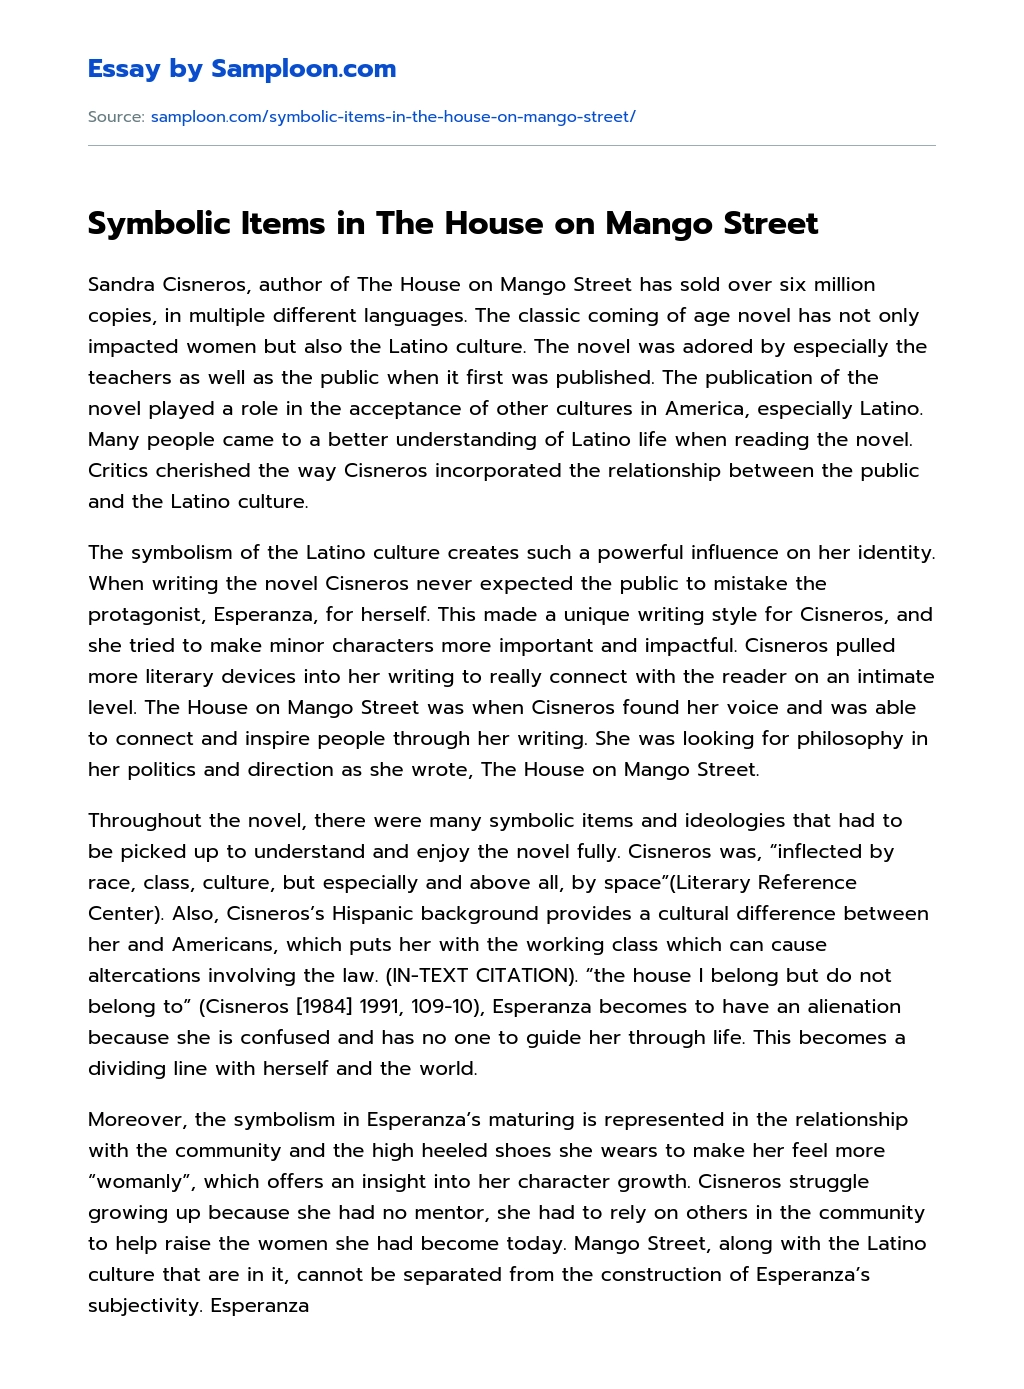 Symbolic Items in The House on Mango Street essay